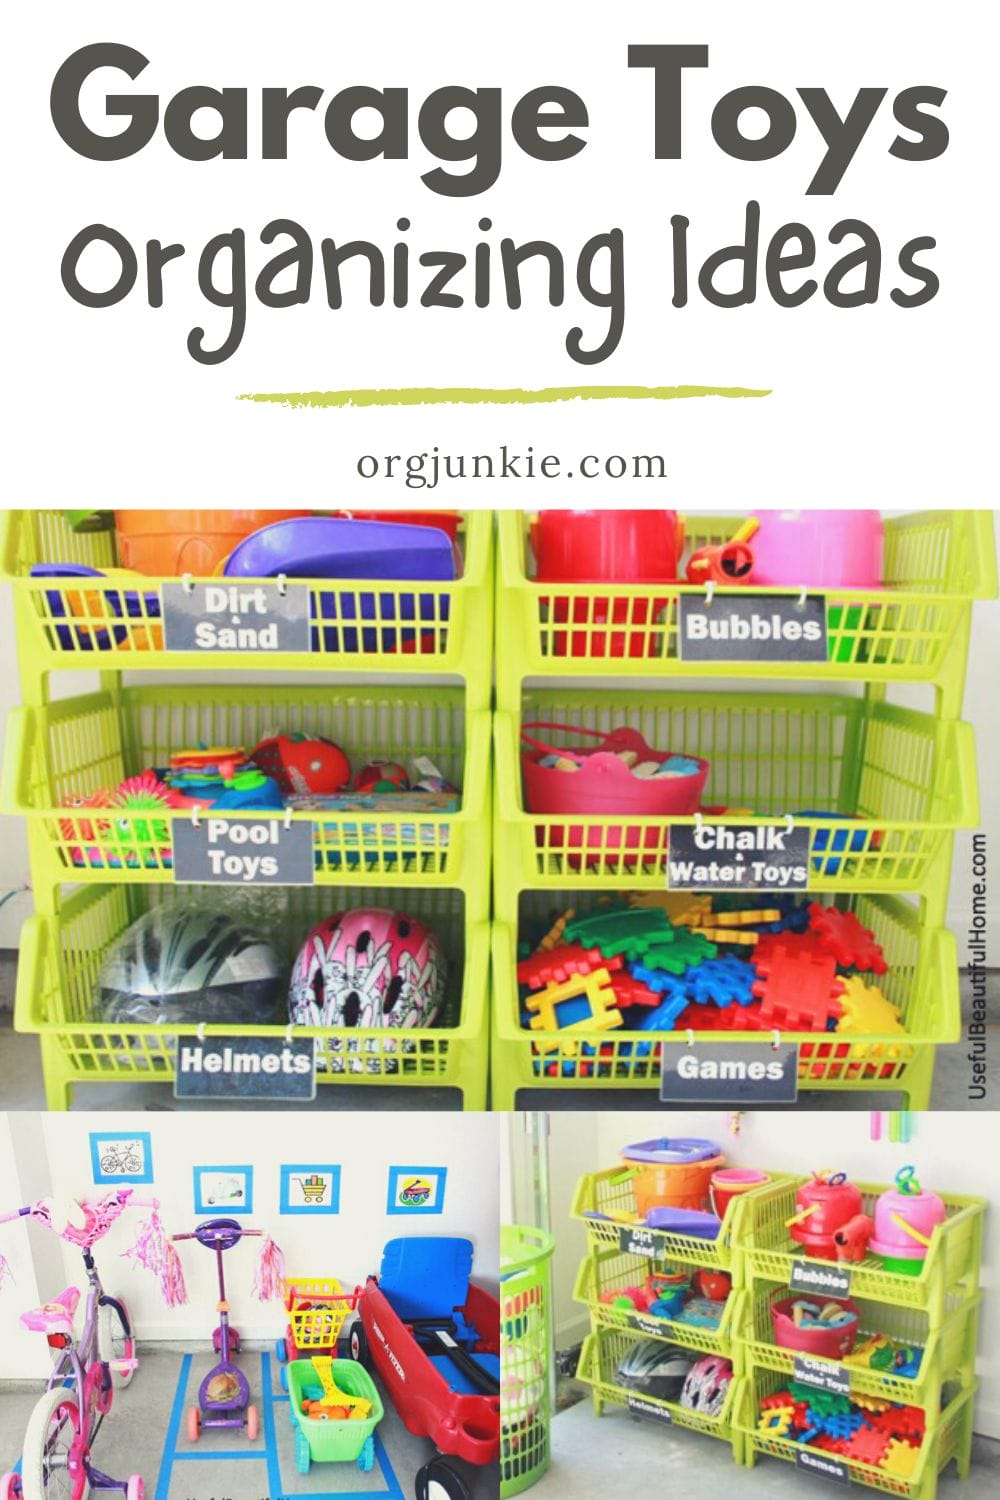 Garage Toys Organizing Ideas at I'm an Organizing Junkie blog